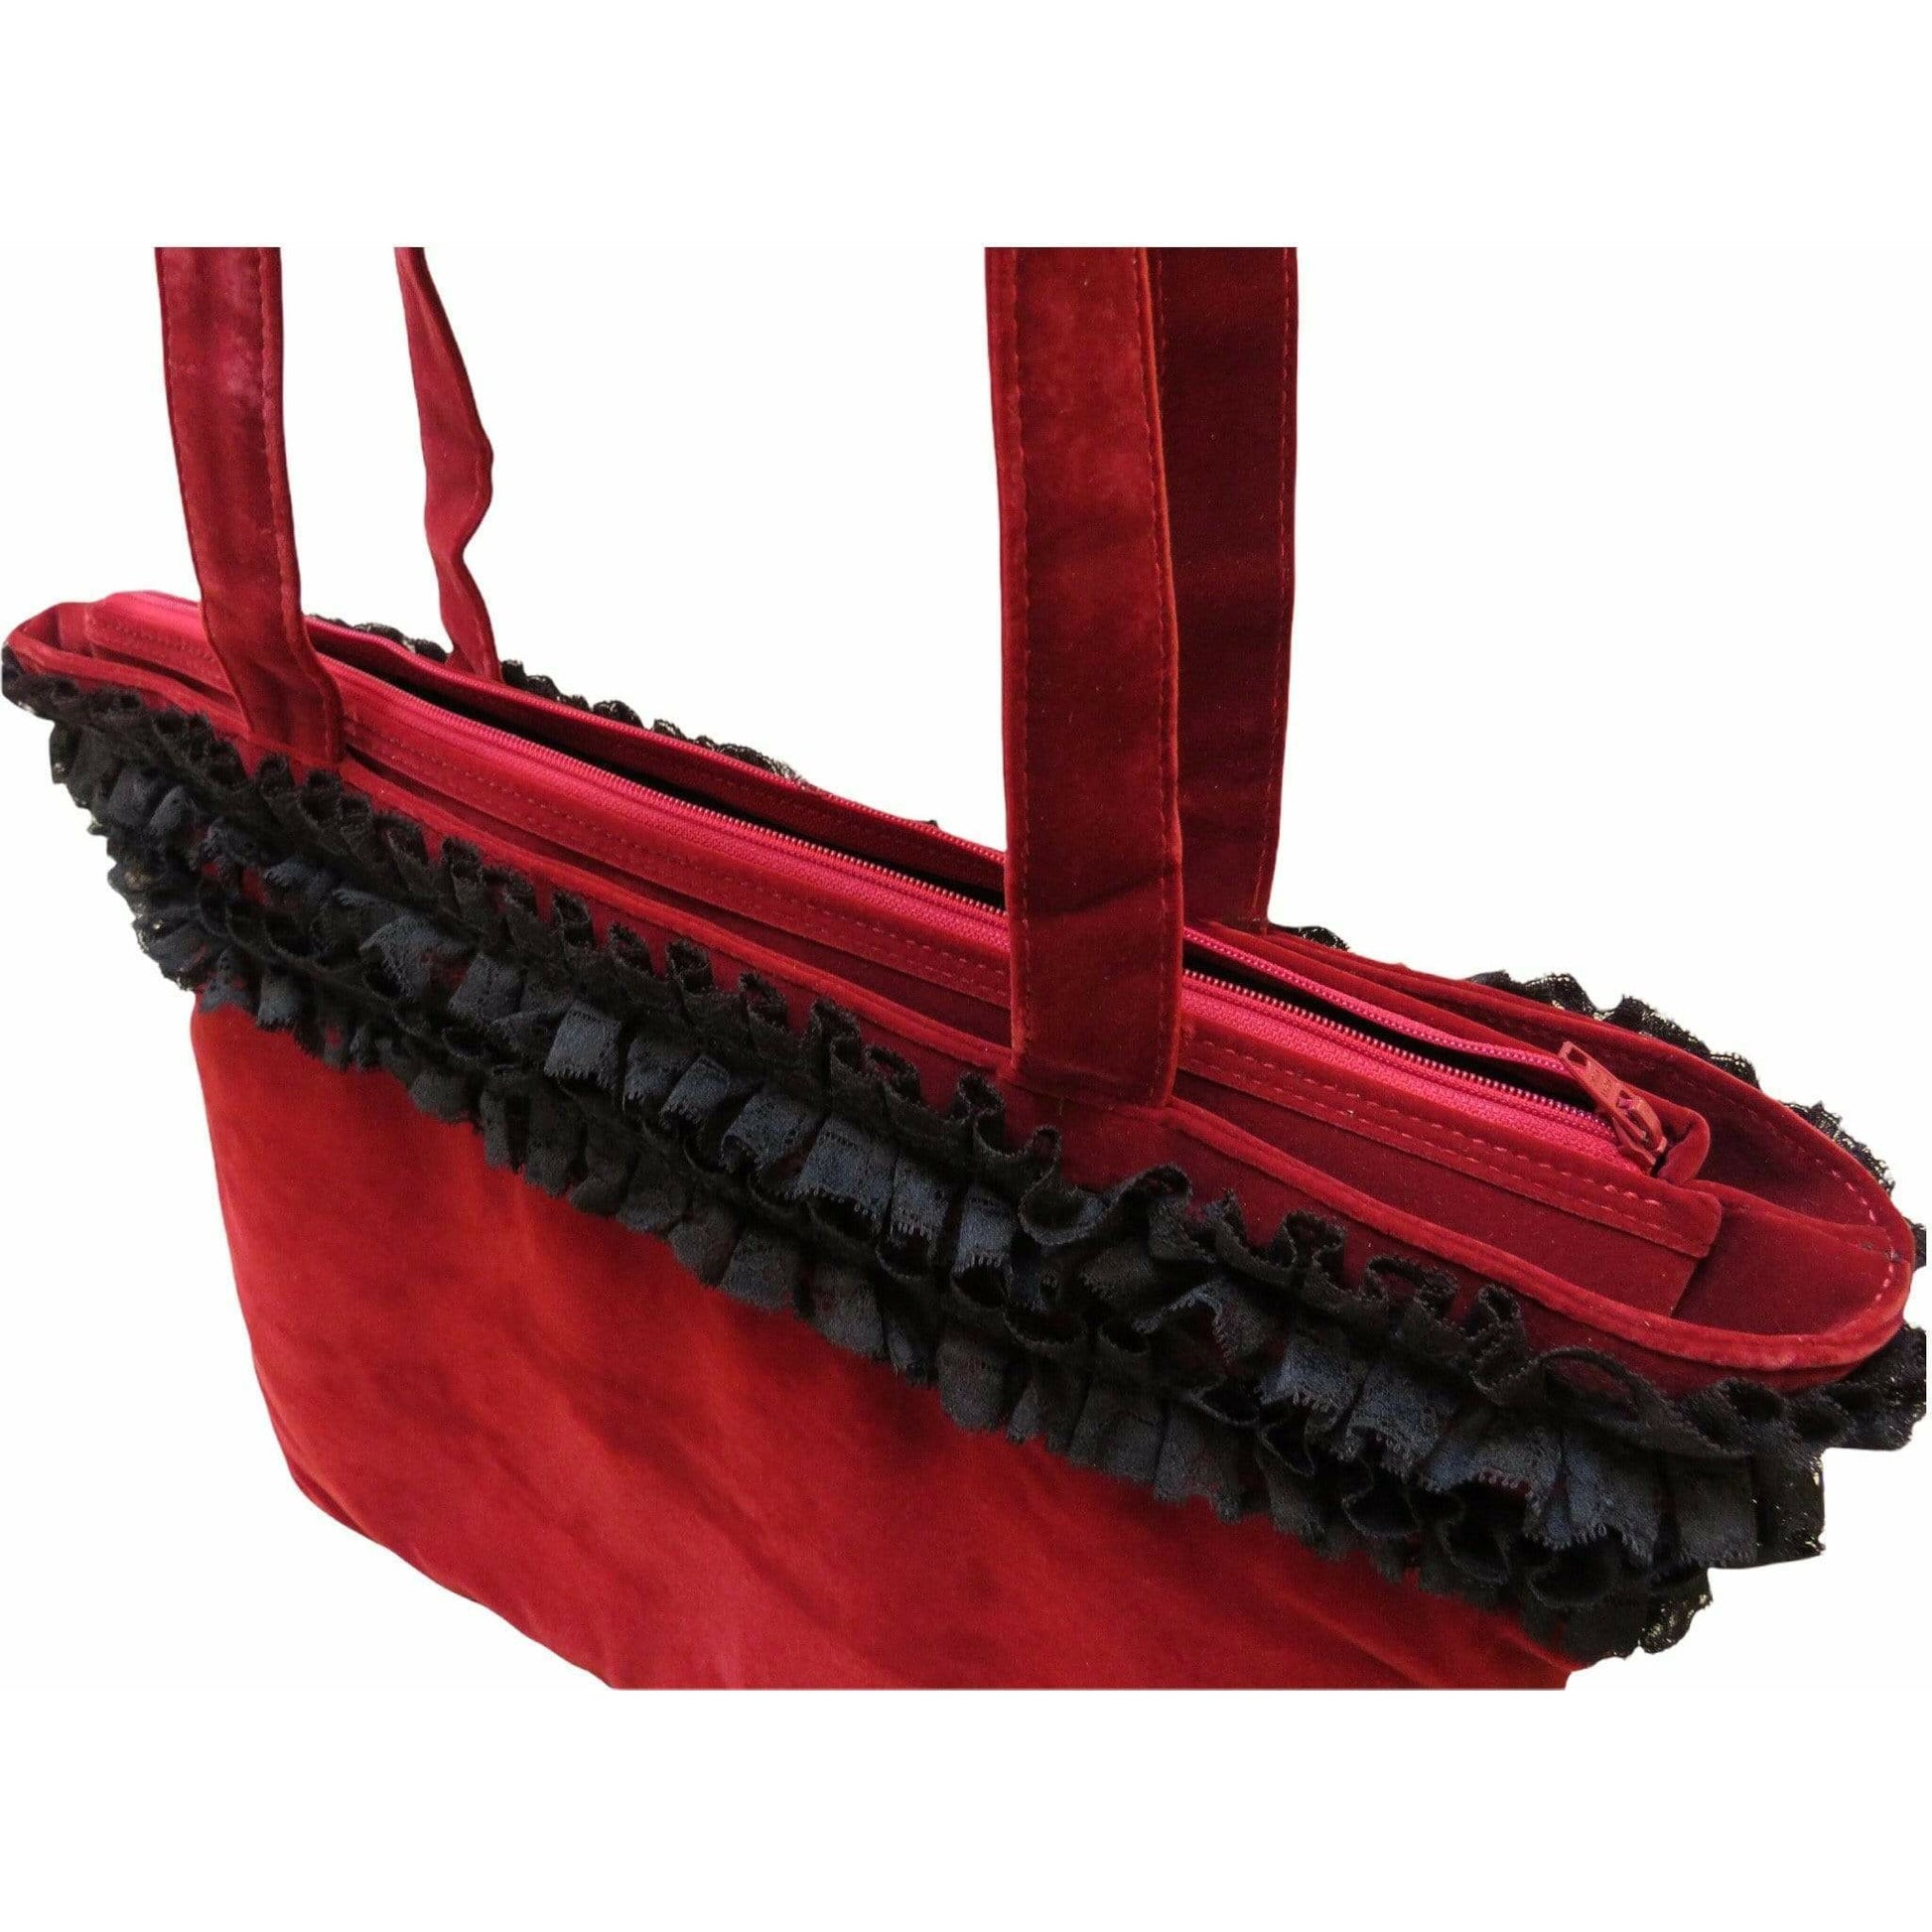 Handbags chantal-thomass-red-velvet-and-lace-shoulder-bag Black